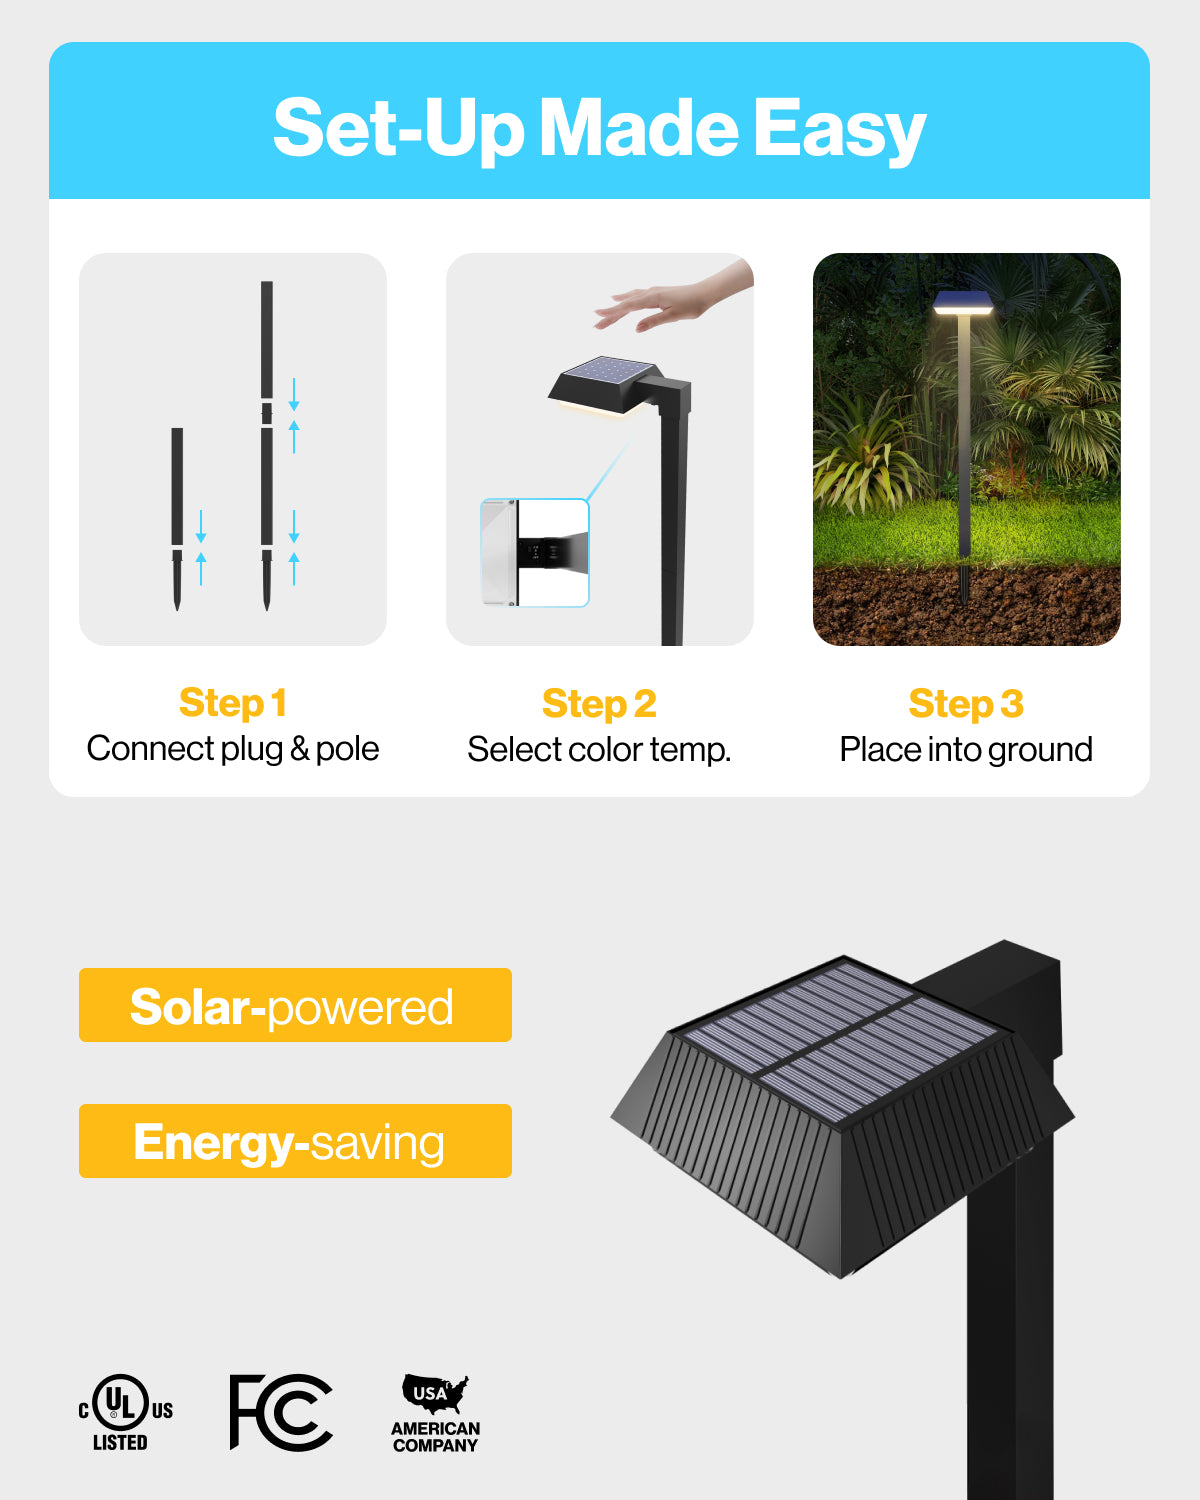 Sunco Lighting LED Solar Sidewalk Light Three Easy Steps to Install Solar-powered Energy-saving Outdoor Lighting